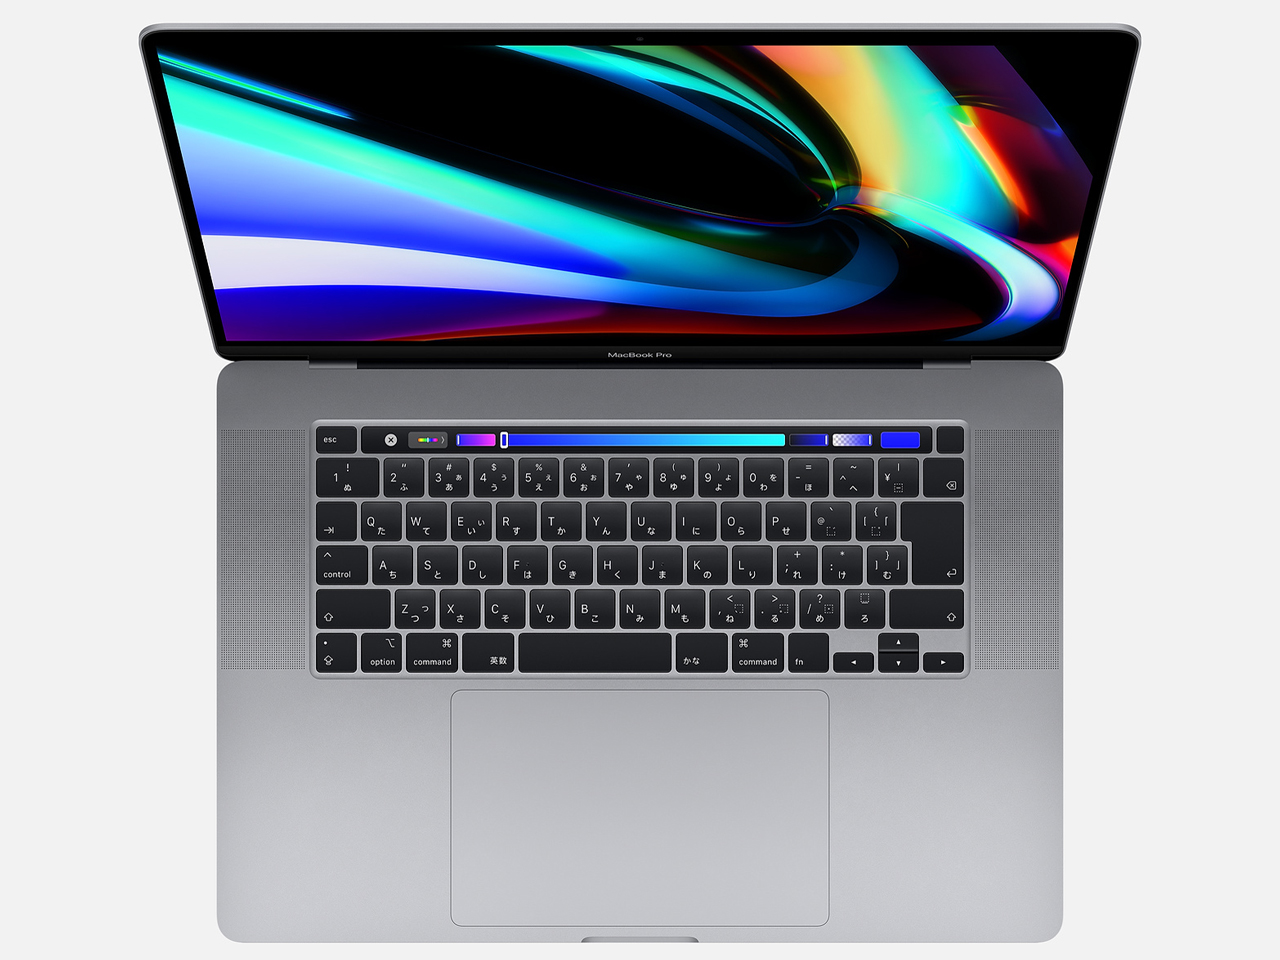 MacBook Pro Retinaディスプレイ 2300/16 MVVK2J/A [スペースグレイ] の製品画像